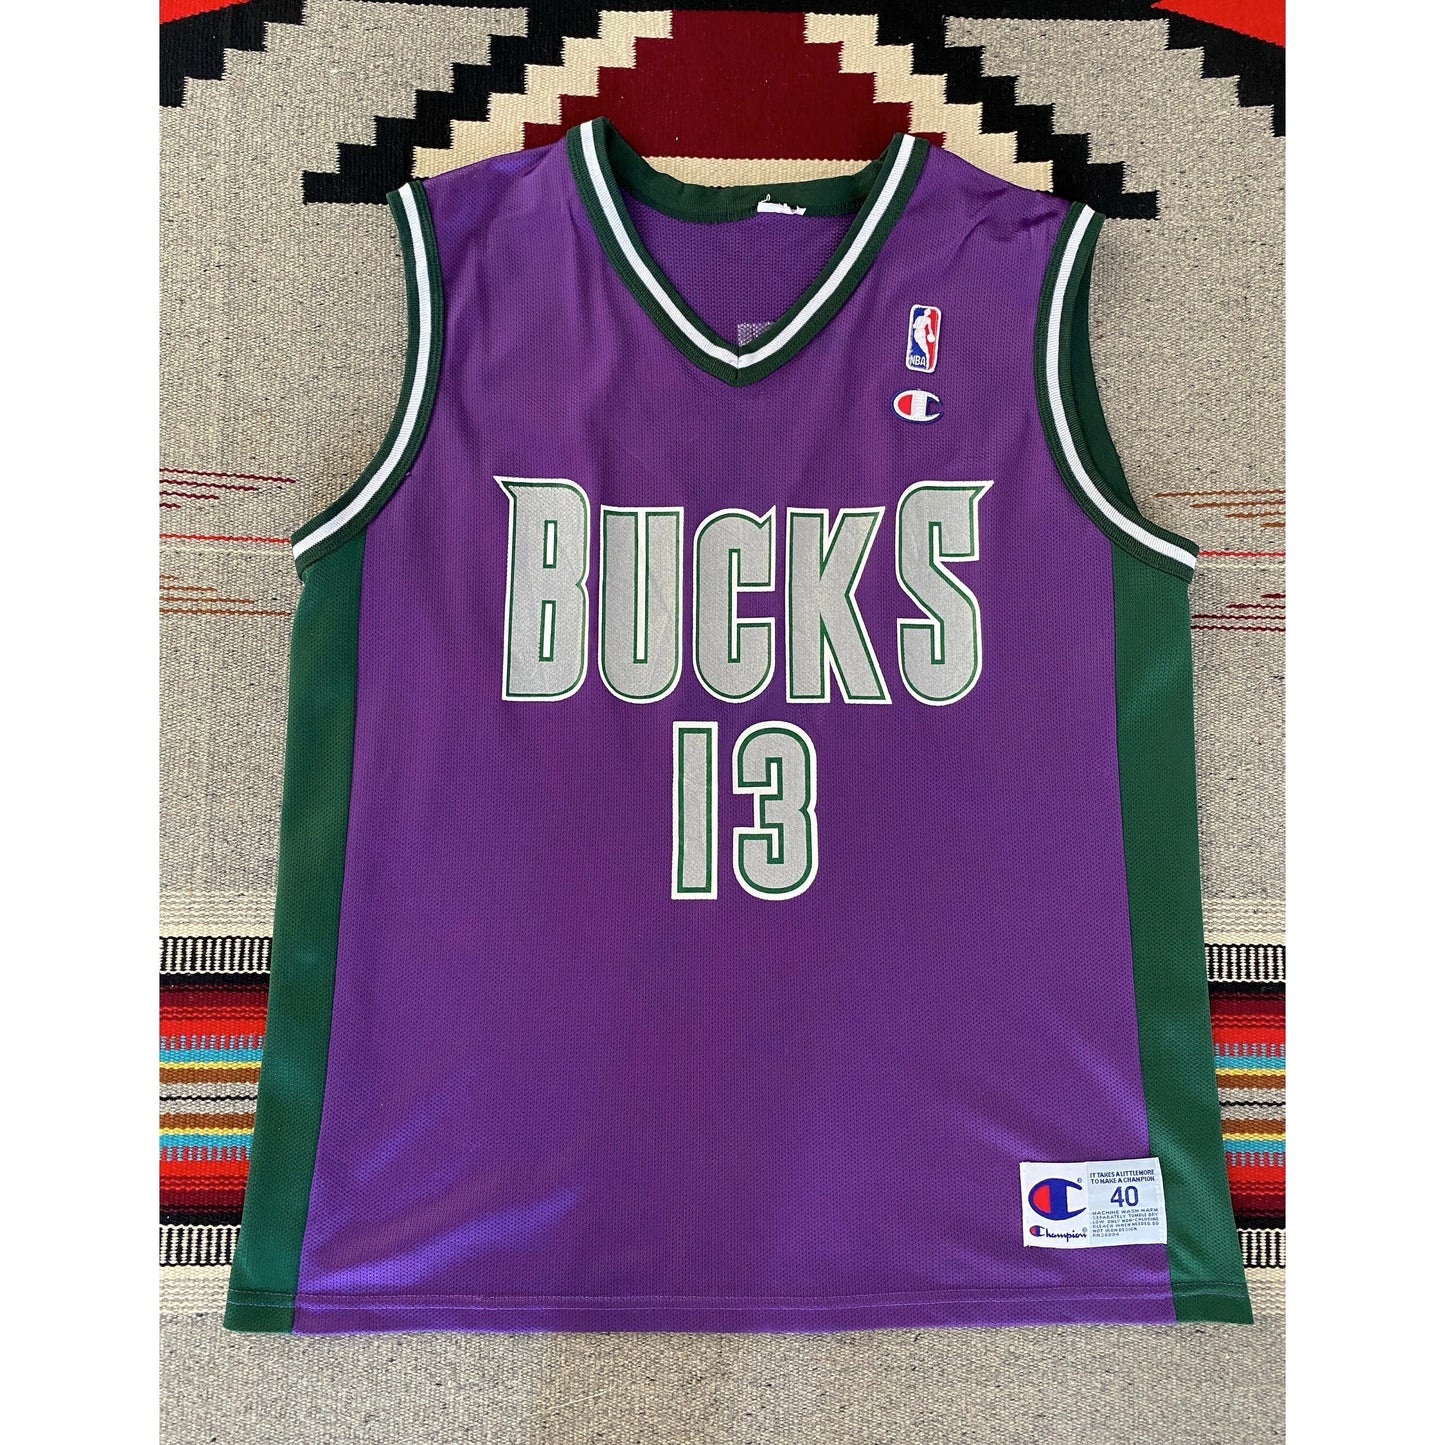 Glenn Robinson #13 - Bucks Vintage NBA Jersey - Size 44